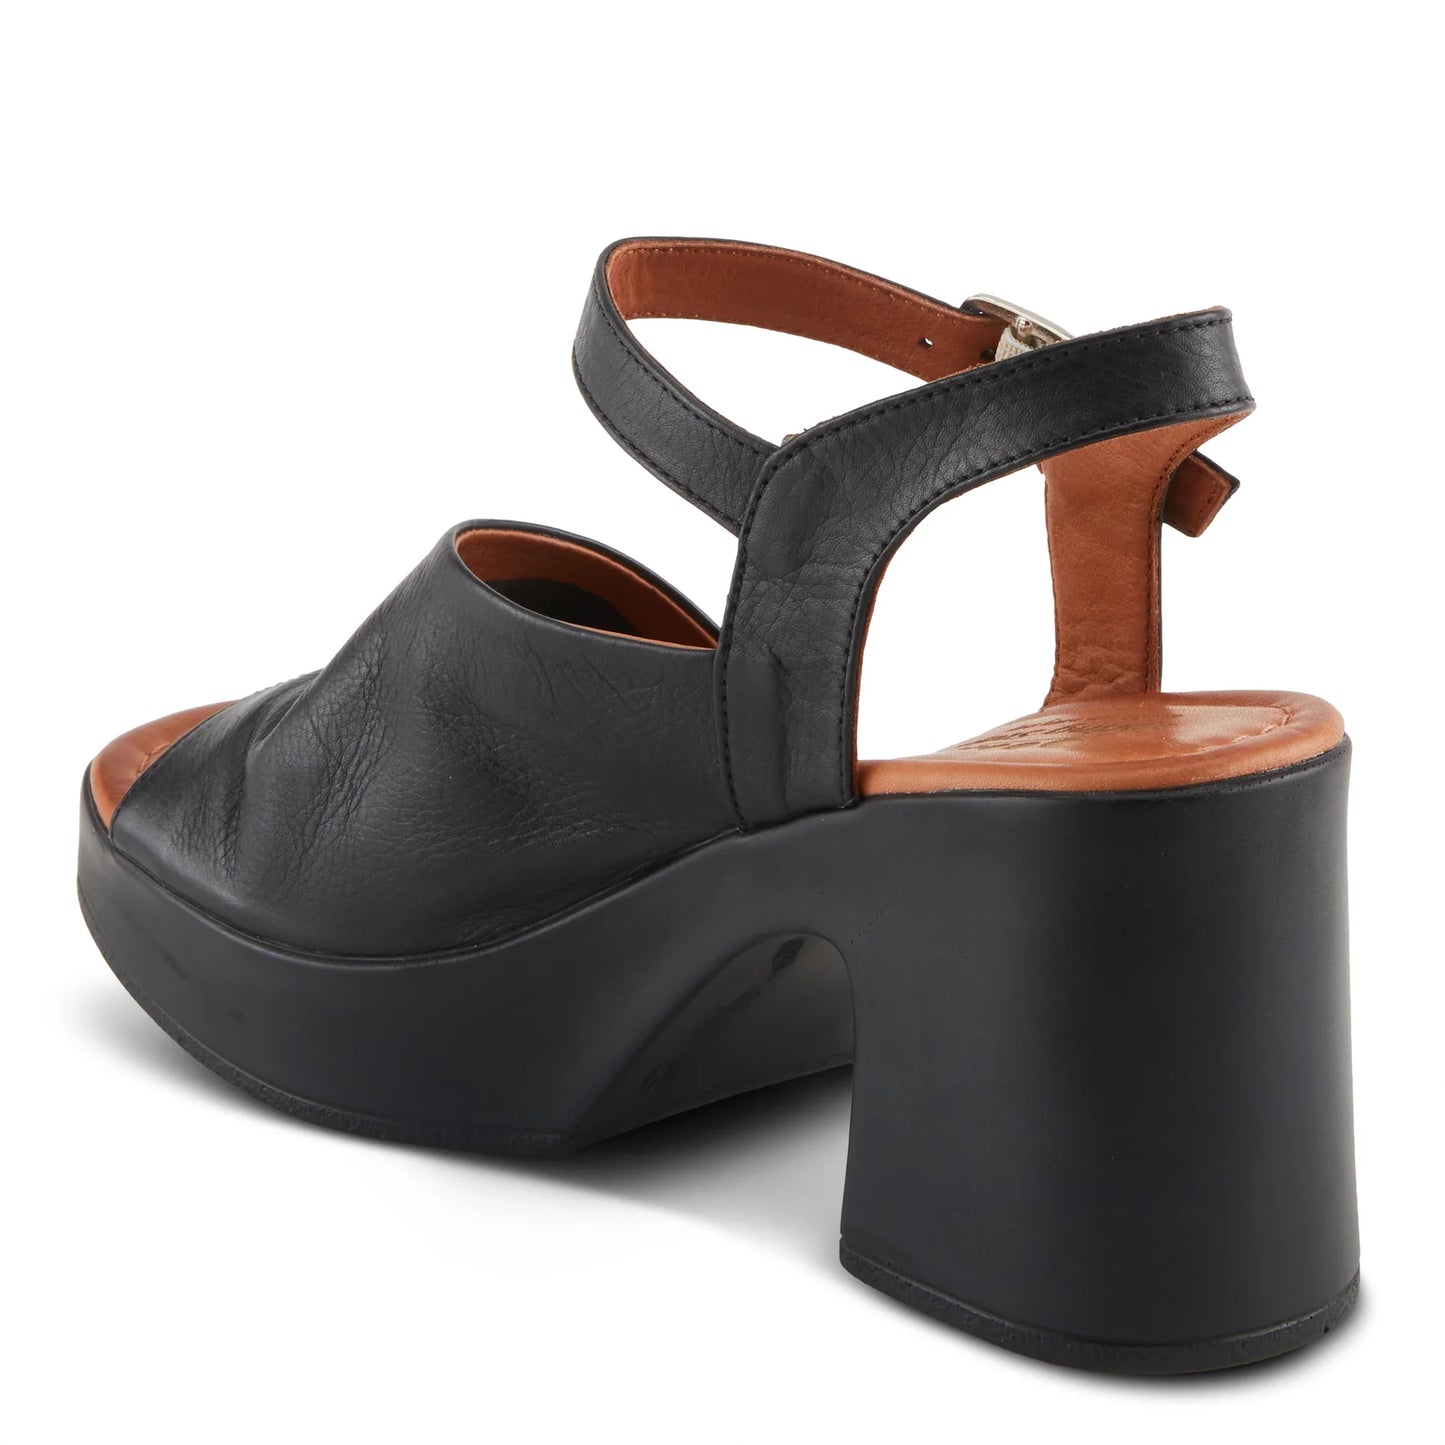 Spring Step Women's Cello Sandals - Black